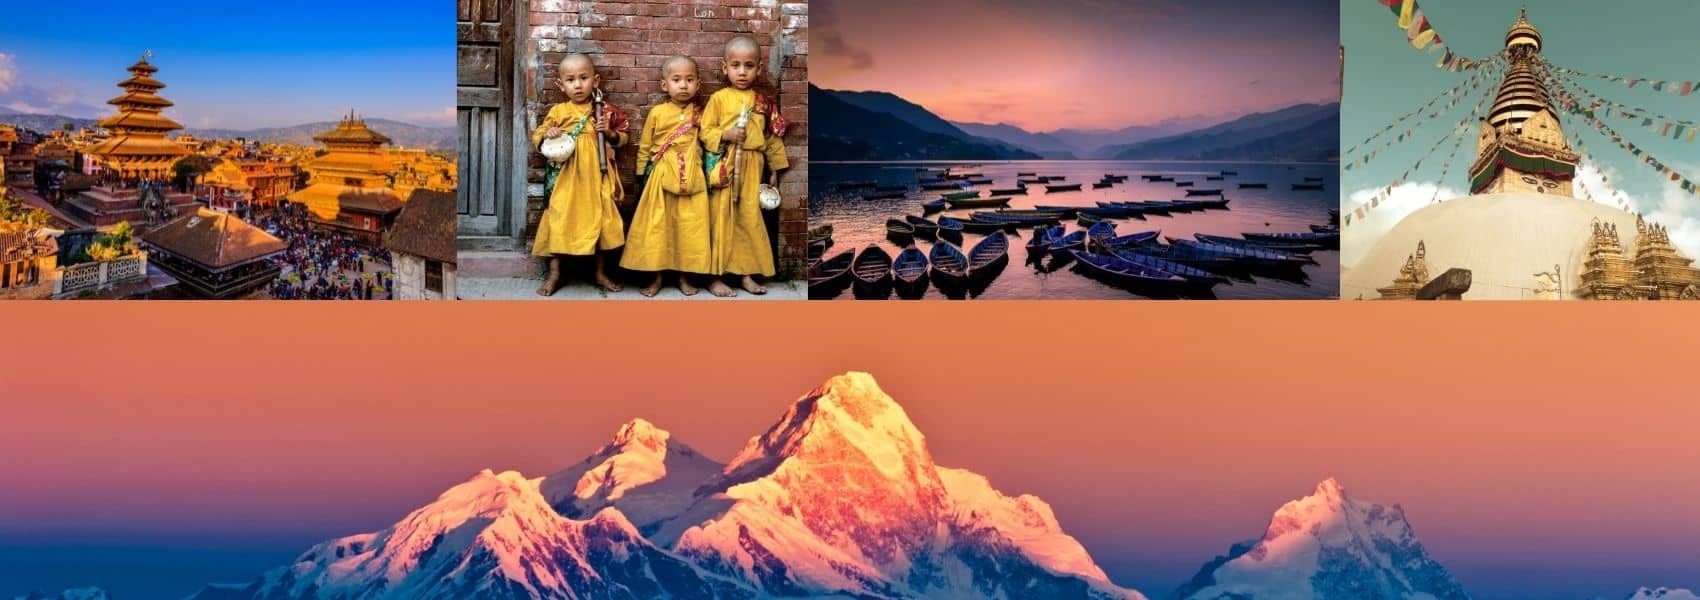 Cosa vedere in Nepal itinerari più affascinanti